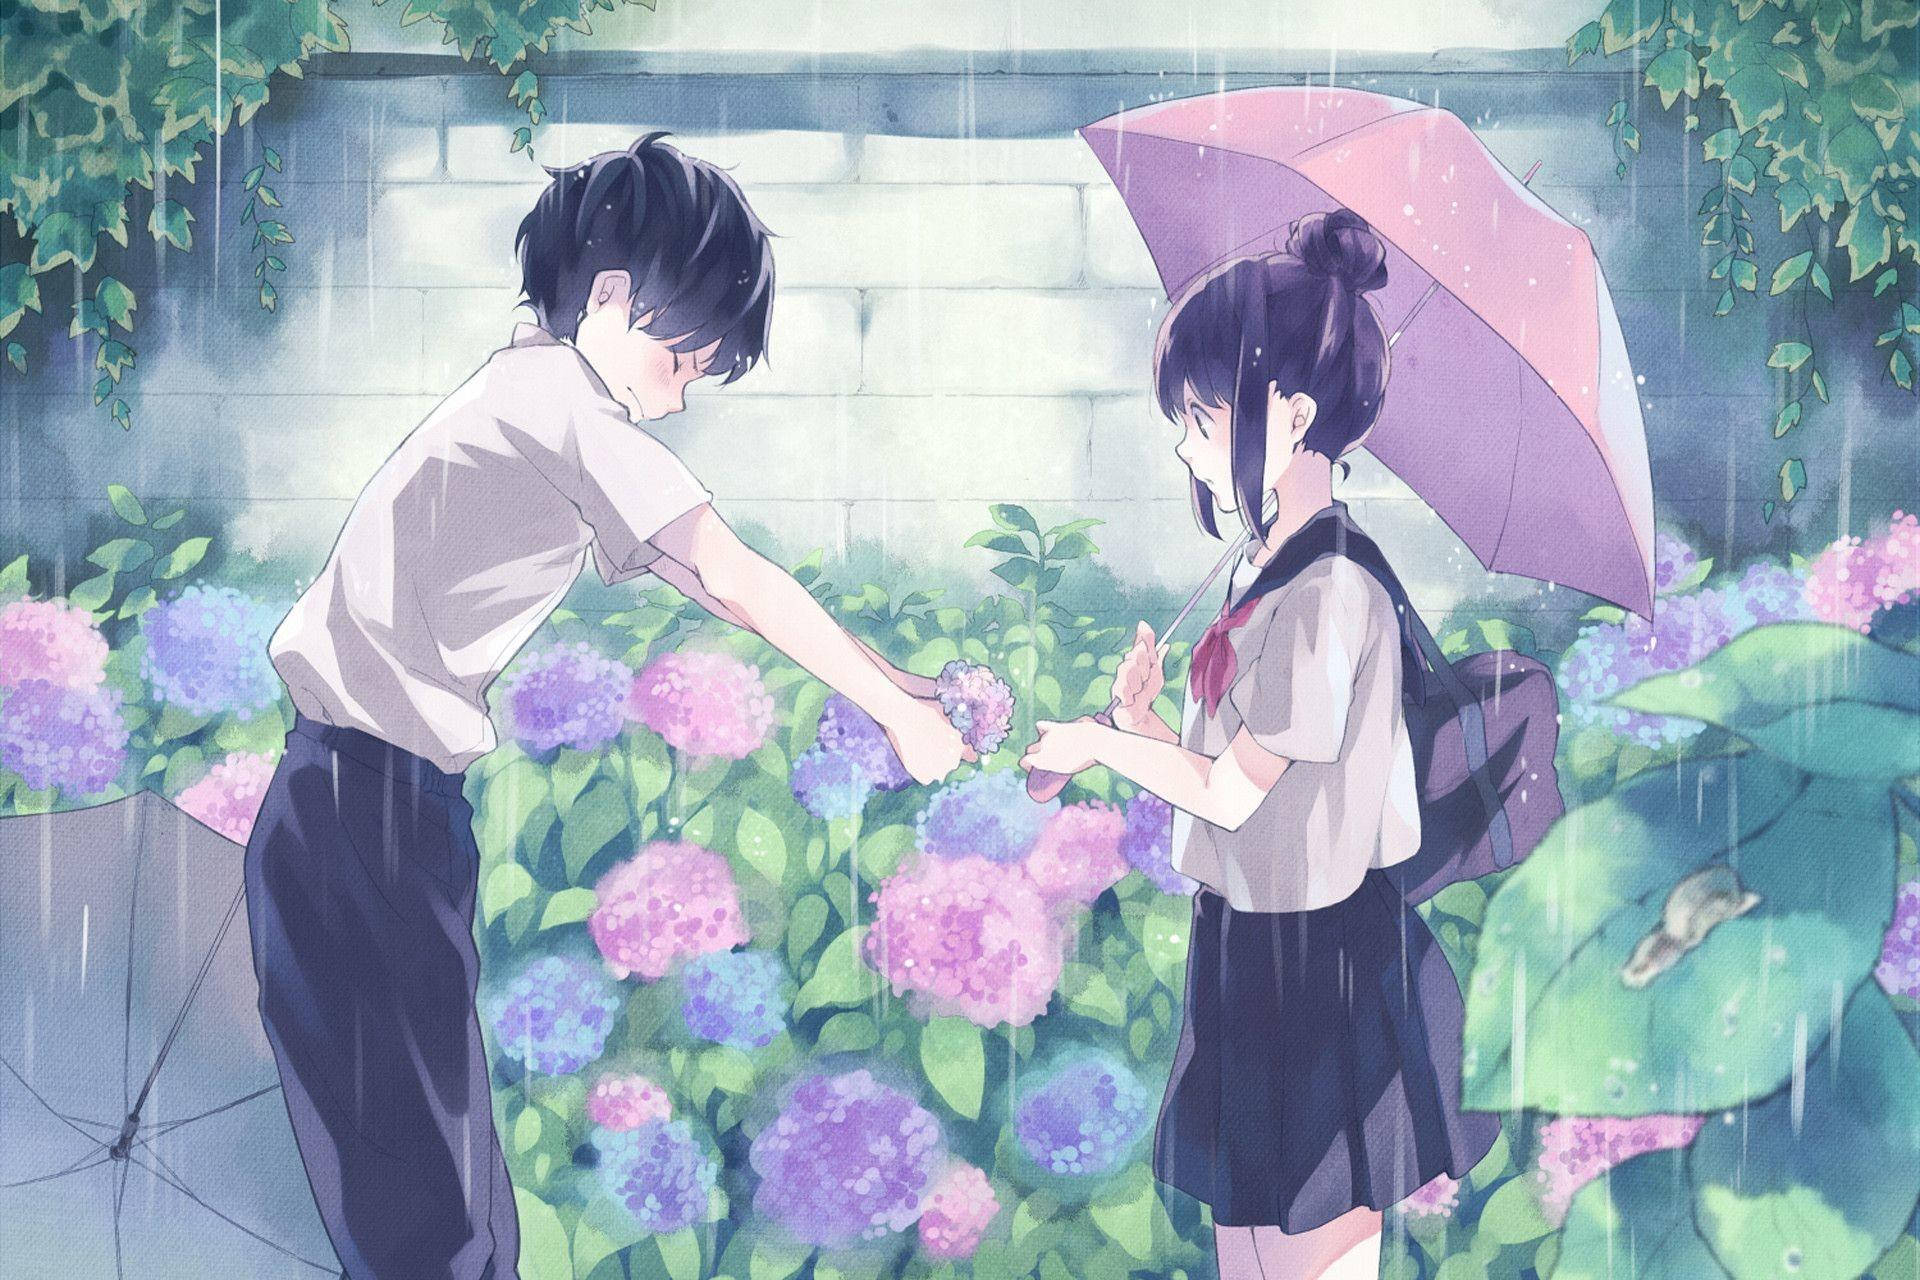 Cute Anime Couple In School Uniform